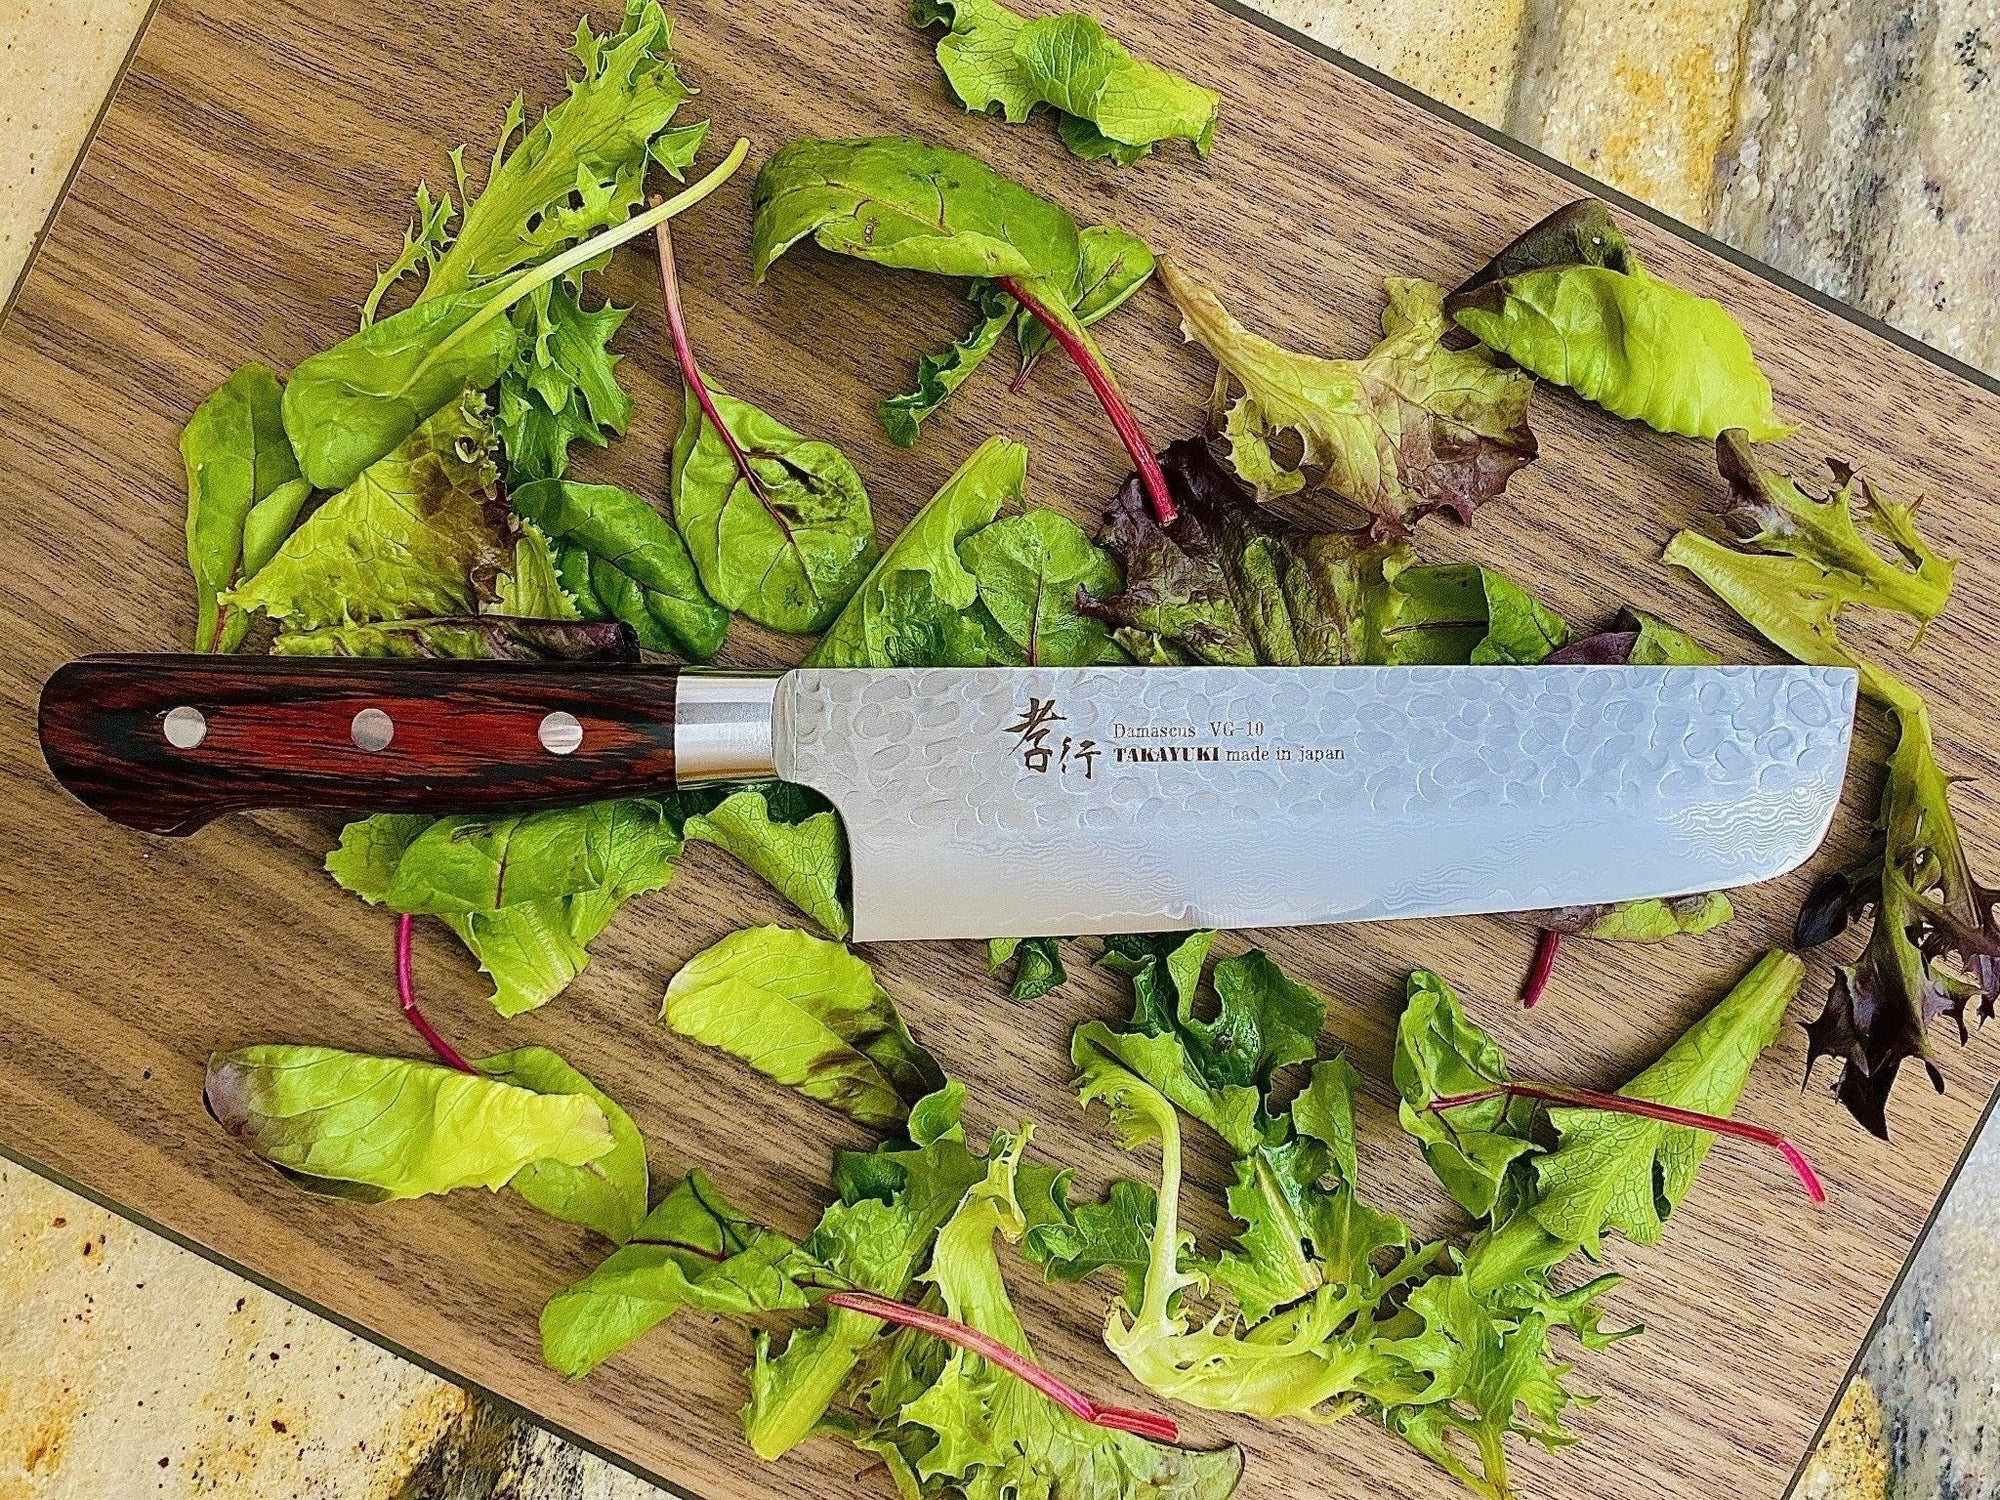 Kitchen Knives - Sakai Takayuki 33 Layer Damascus Nakiri Knife 160mm (6.3")